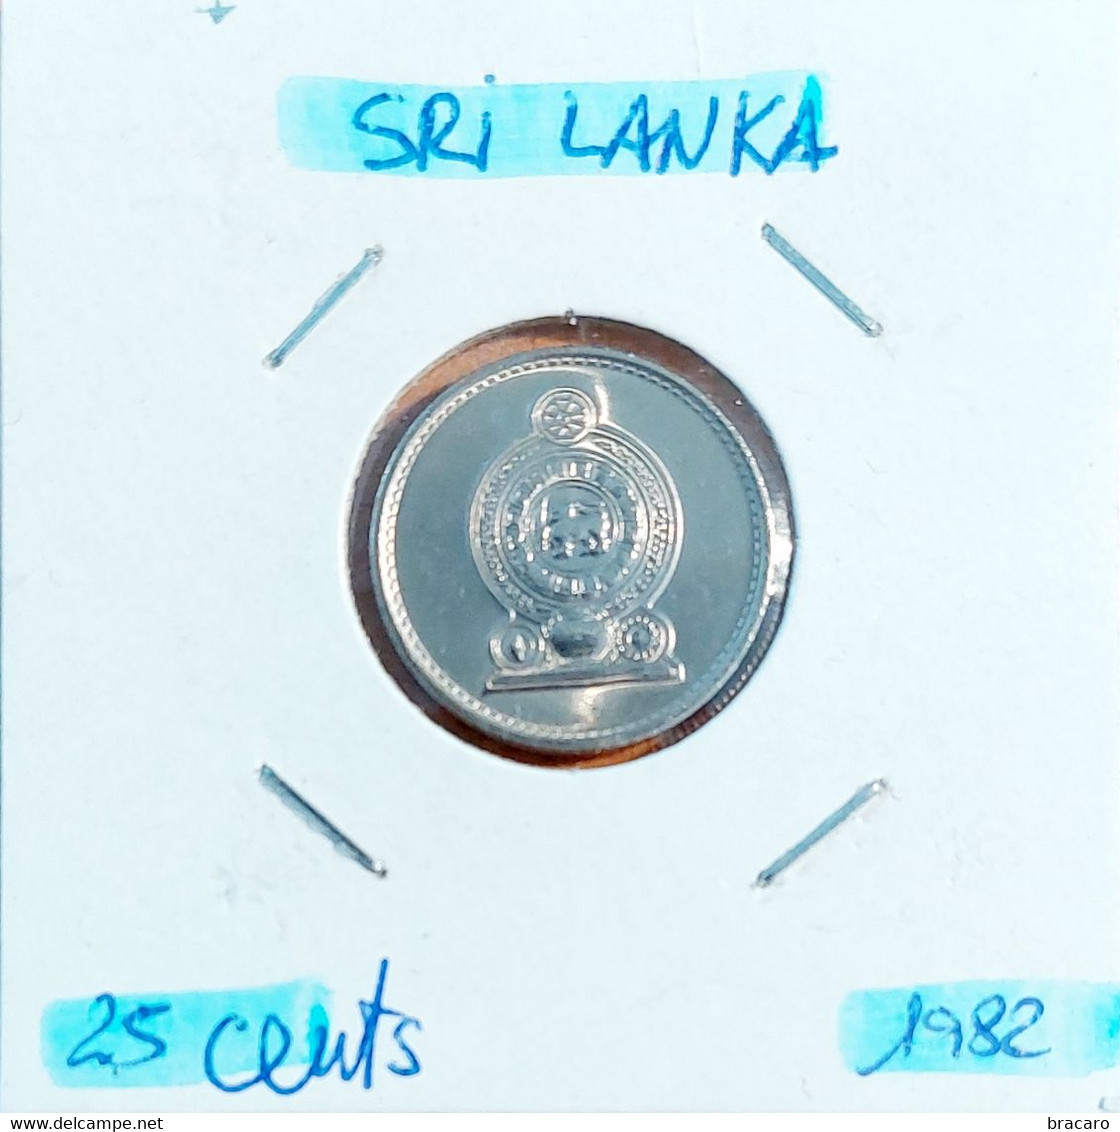 ASIA (LEBANON, LIBYA, SRI LANKA, SAUDI ARABIA, BAHRAIN, BRUNEI, JORDAN, INDONESIA, UAE) - 12 coins (very good condition)